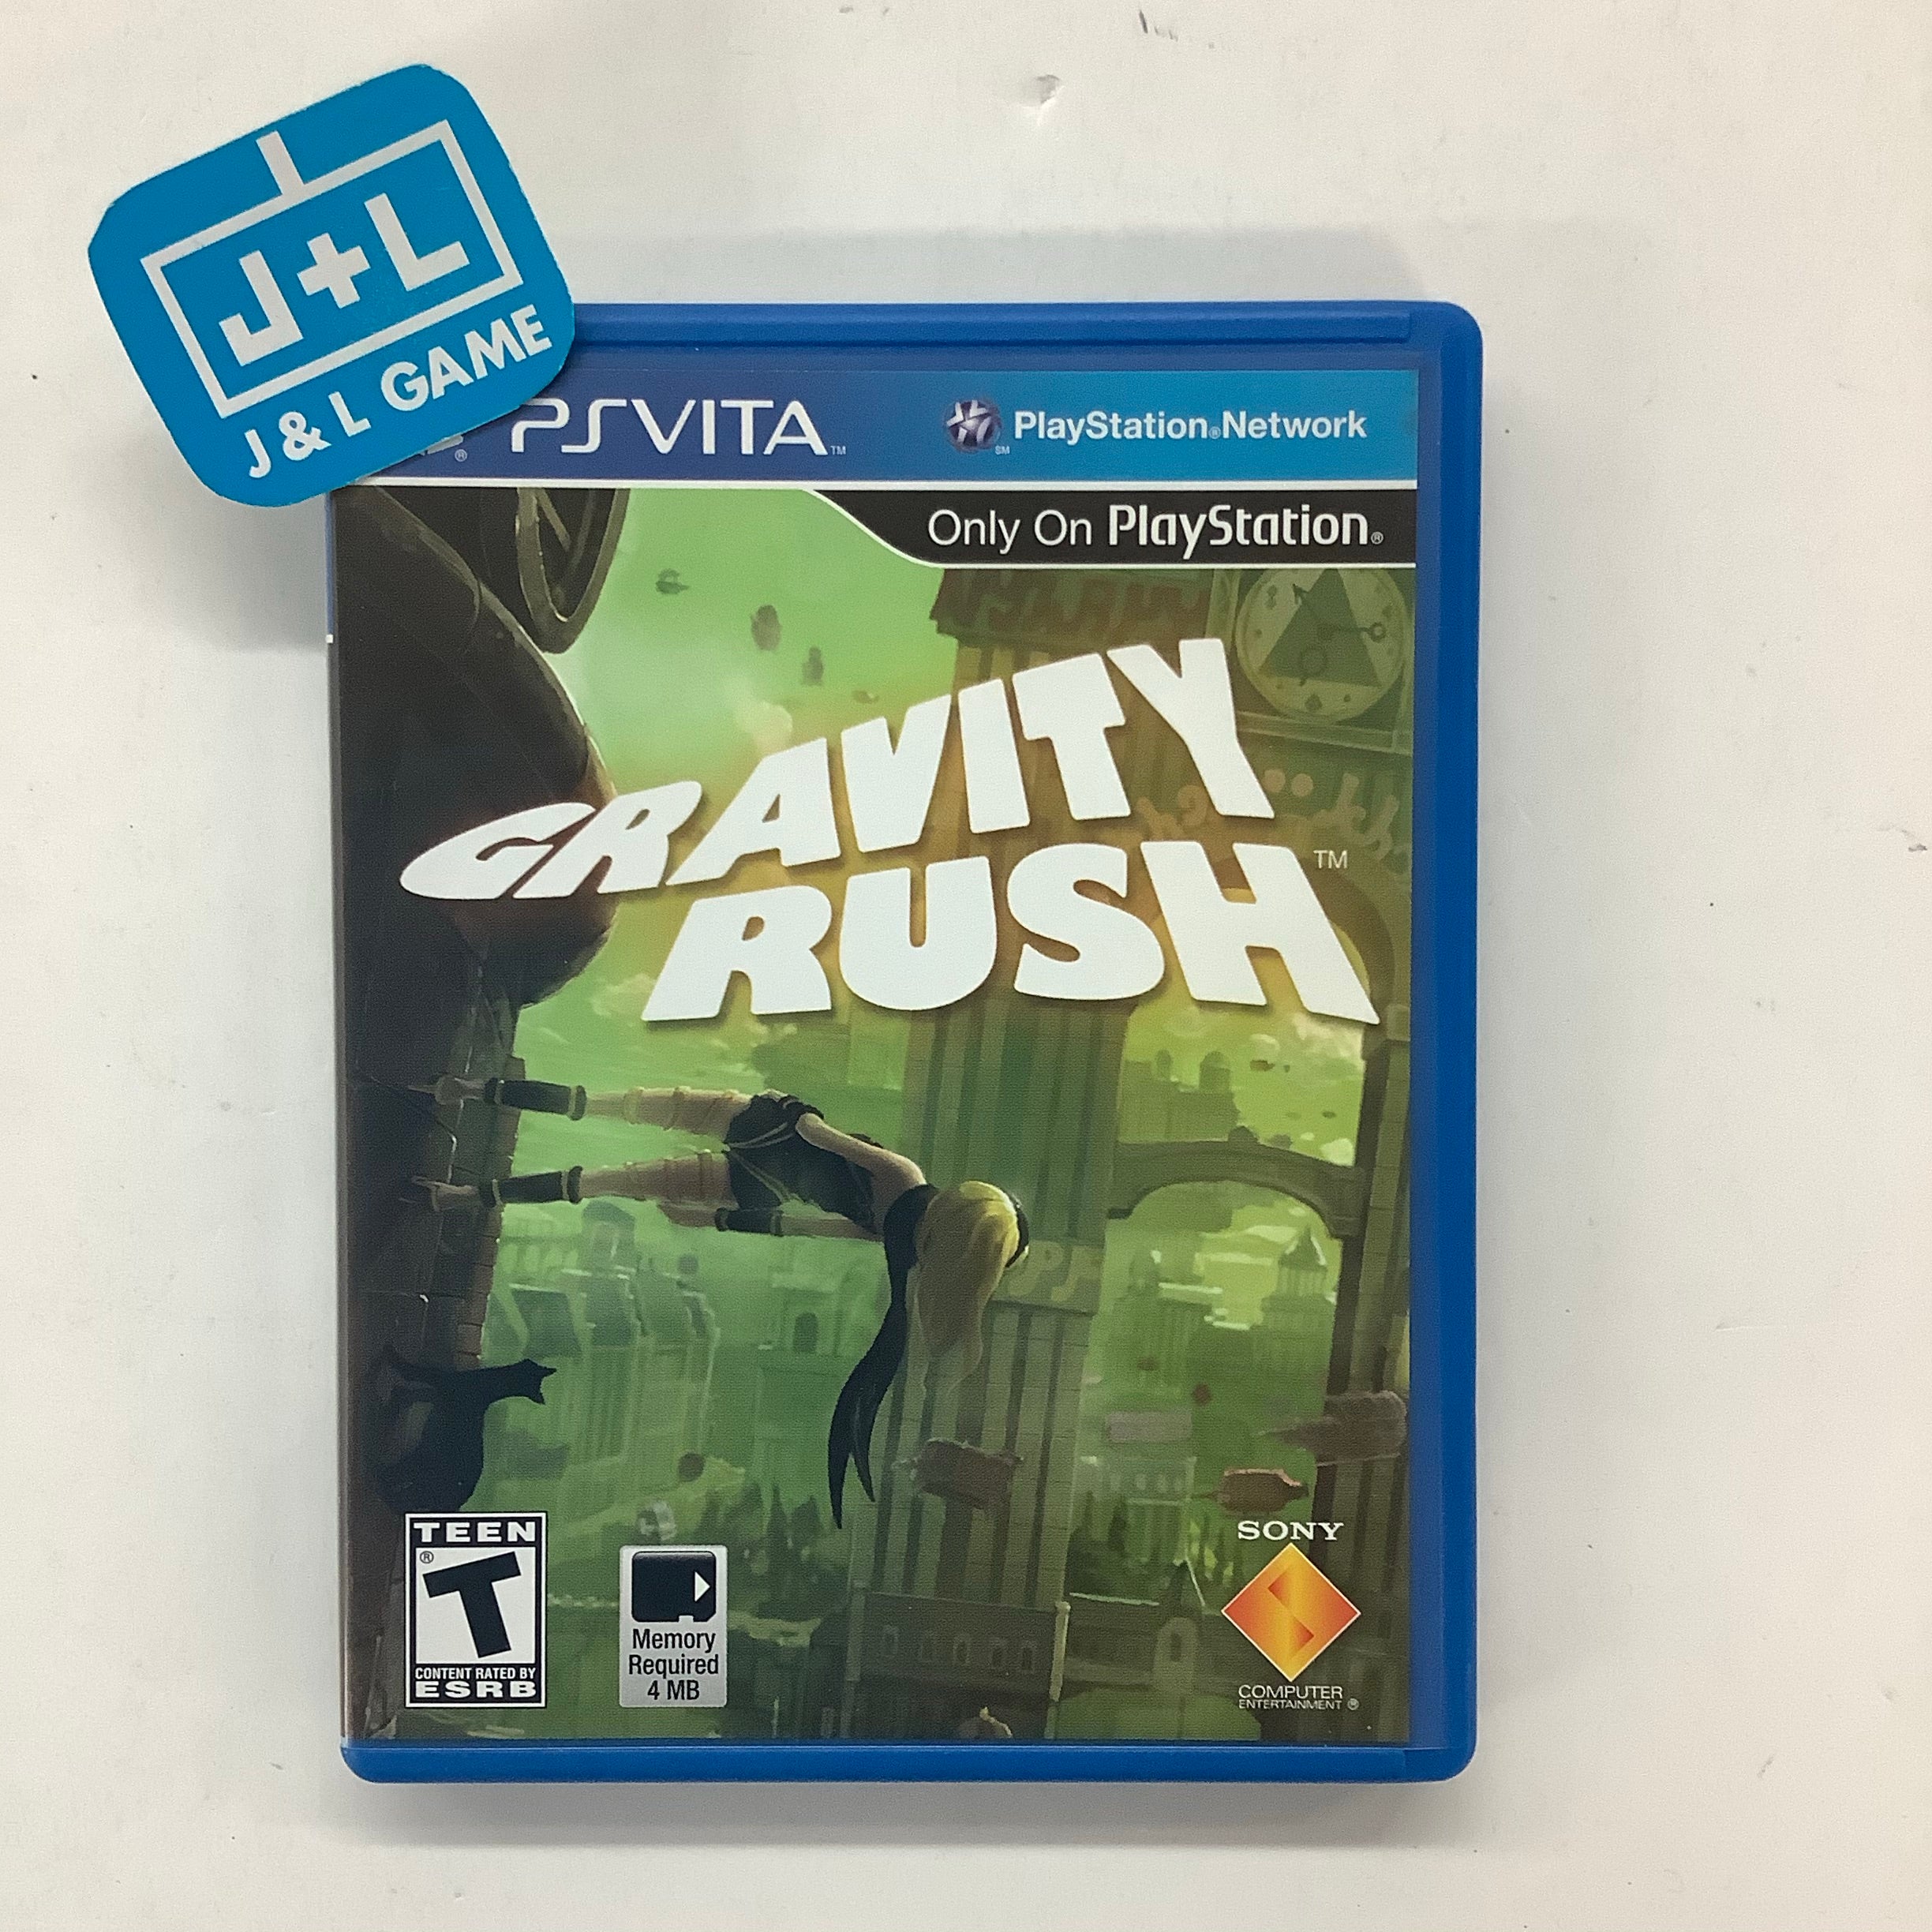 Gravity Rush - (PSV) PlayStation Vita [Pre-Owned] Video Games SCEA   